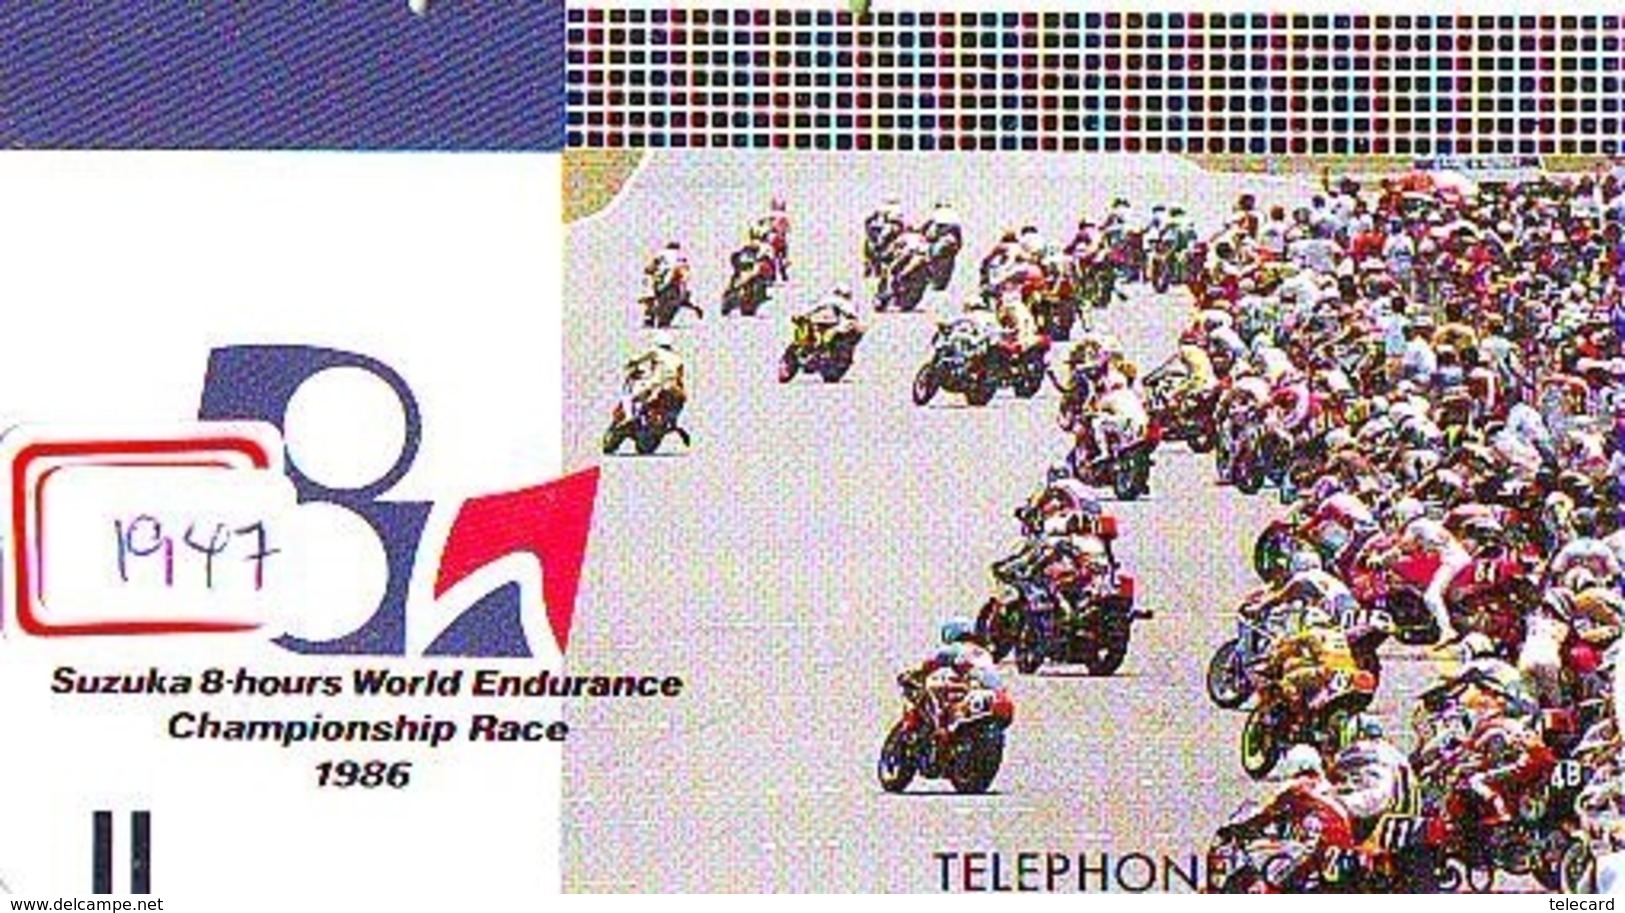 Télécarte Japon * FRONT BAR * 330-2228 * GRAND PRIX 1986 * SUZUKA 8-HOURS * MOTO  (1947) MOTORBIKE * PHONECARD JAPAN - Motos